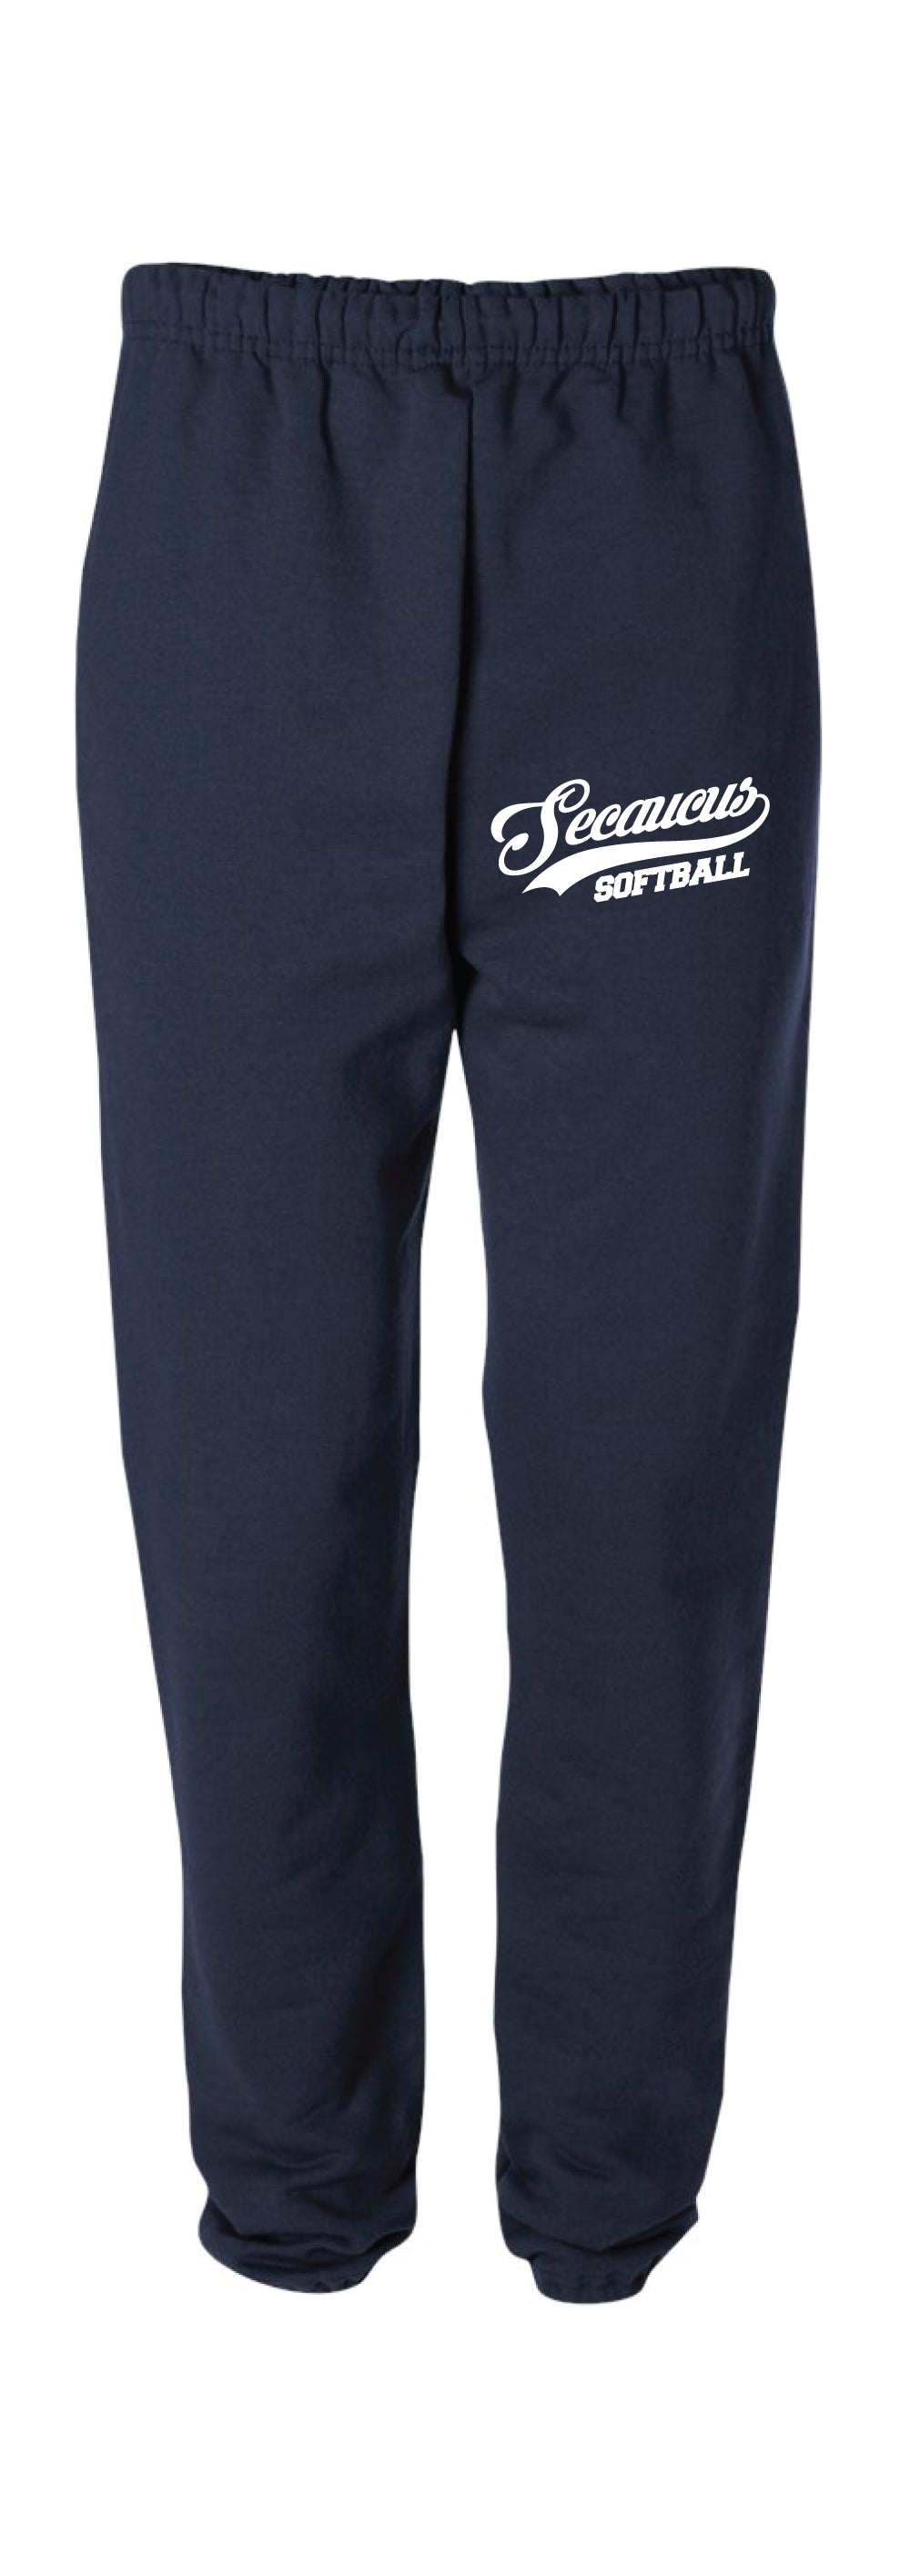 Secaucus Softball Cotton Sweatpants - Navy - 5KounT2018